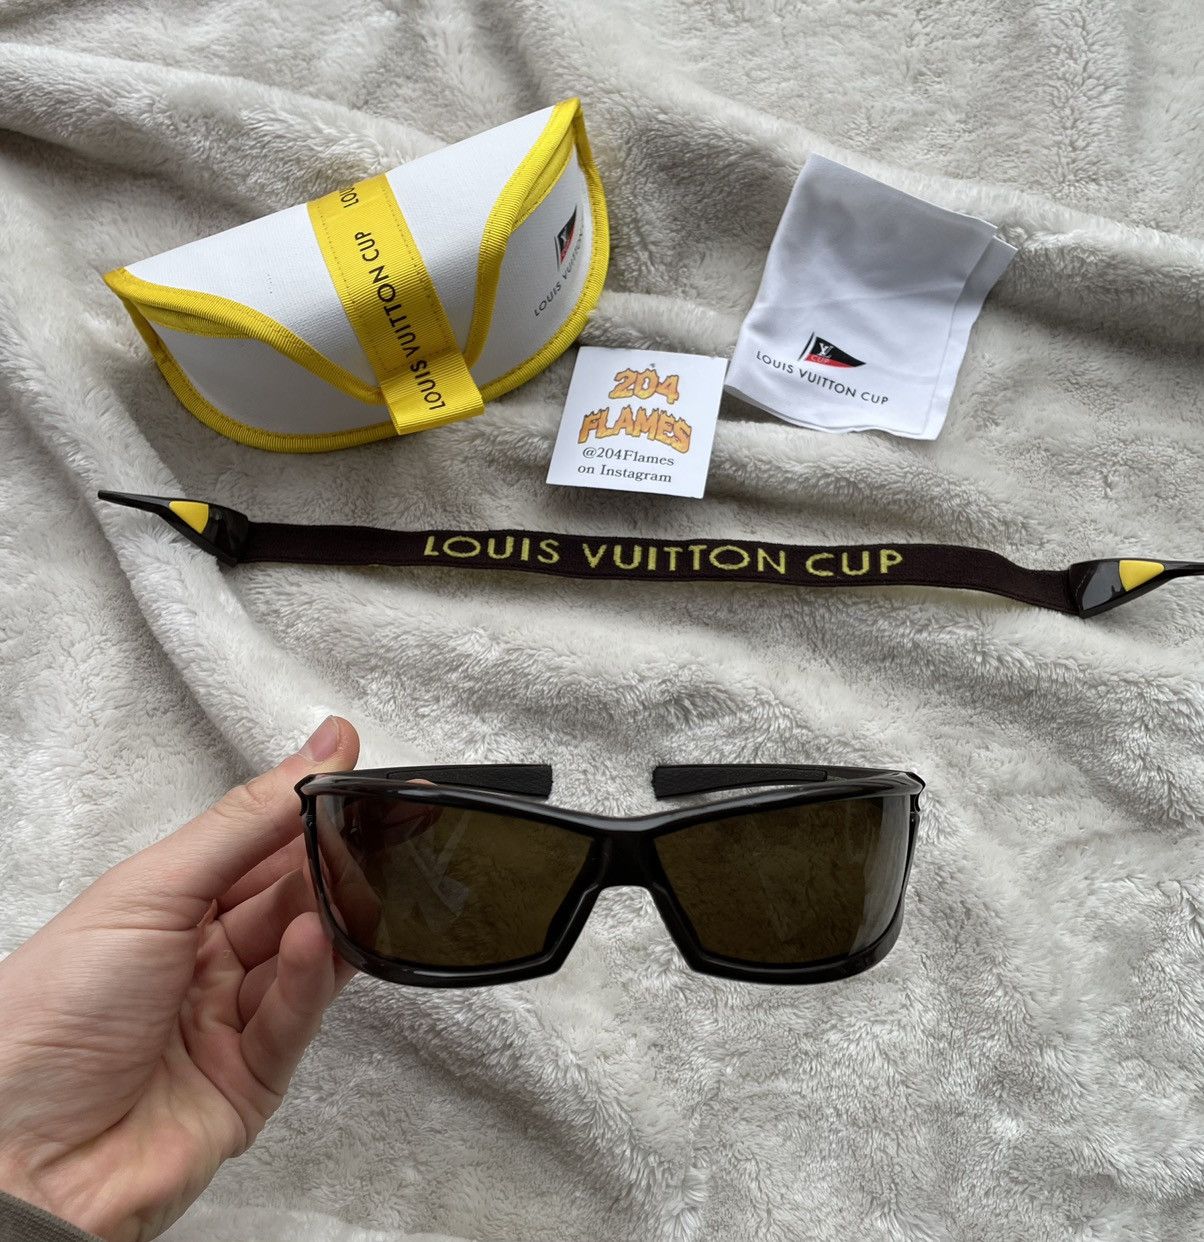 Louis Vuitton - Cyclone Sunglasses (Clear/Transparent) – eluXive